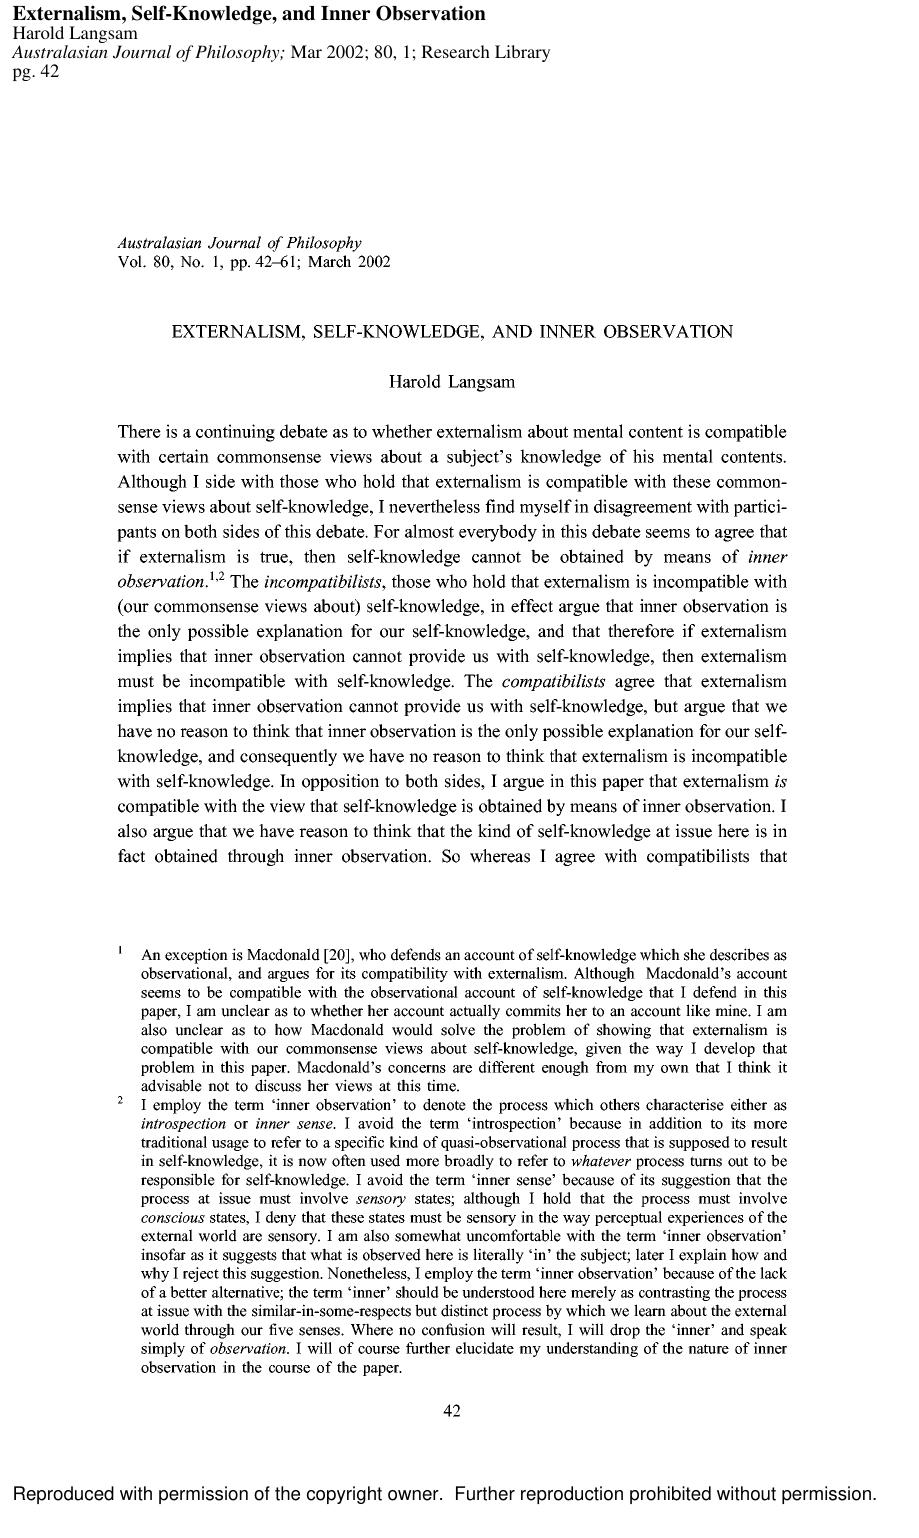 Externalism, Self-Knowledge & Inner Observation - Paper